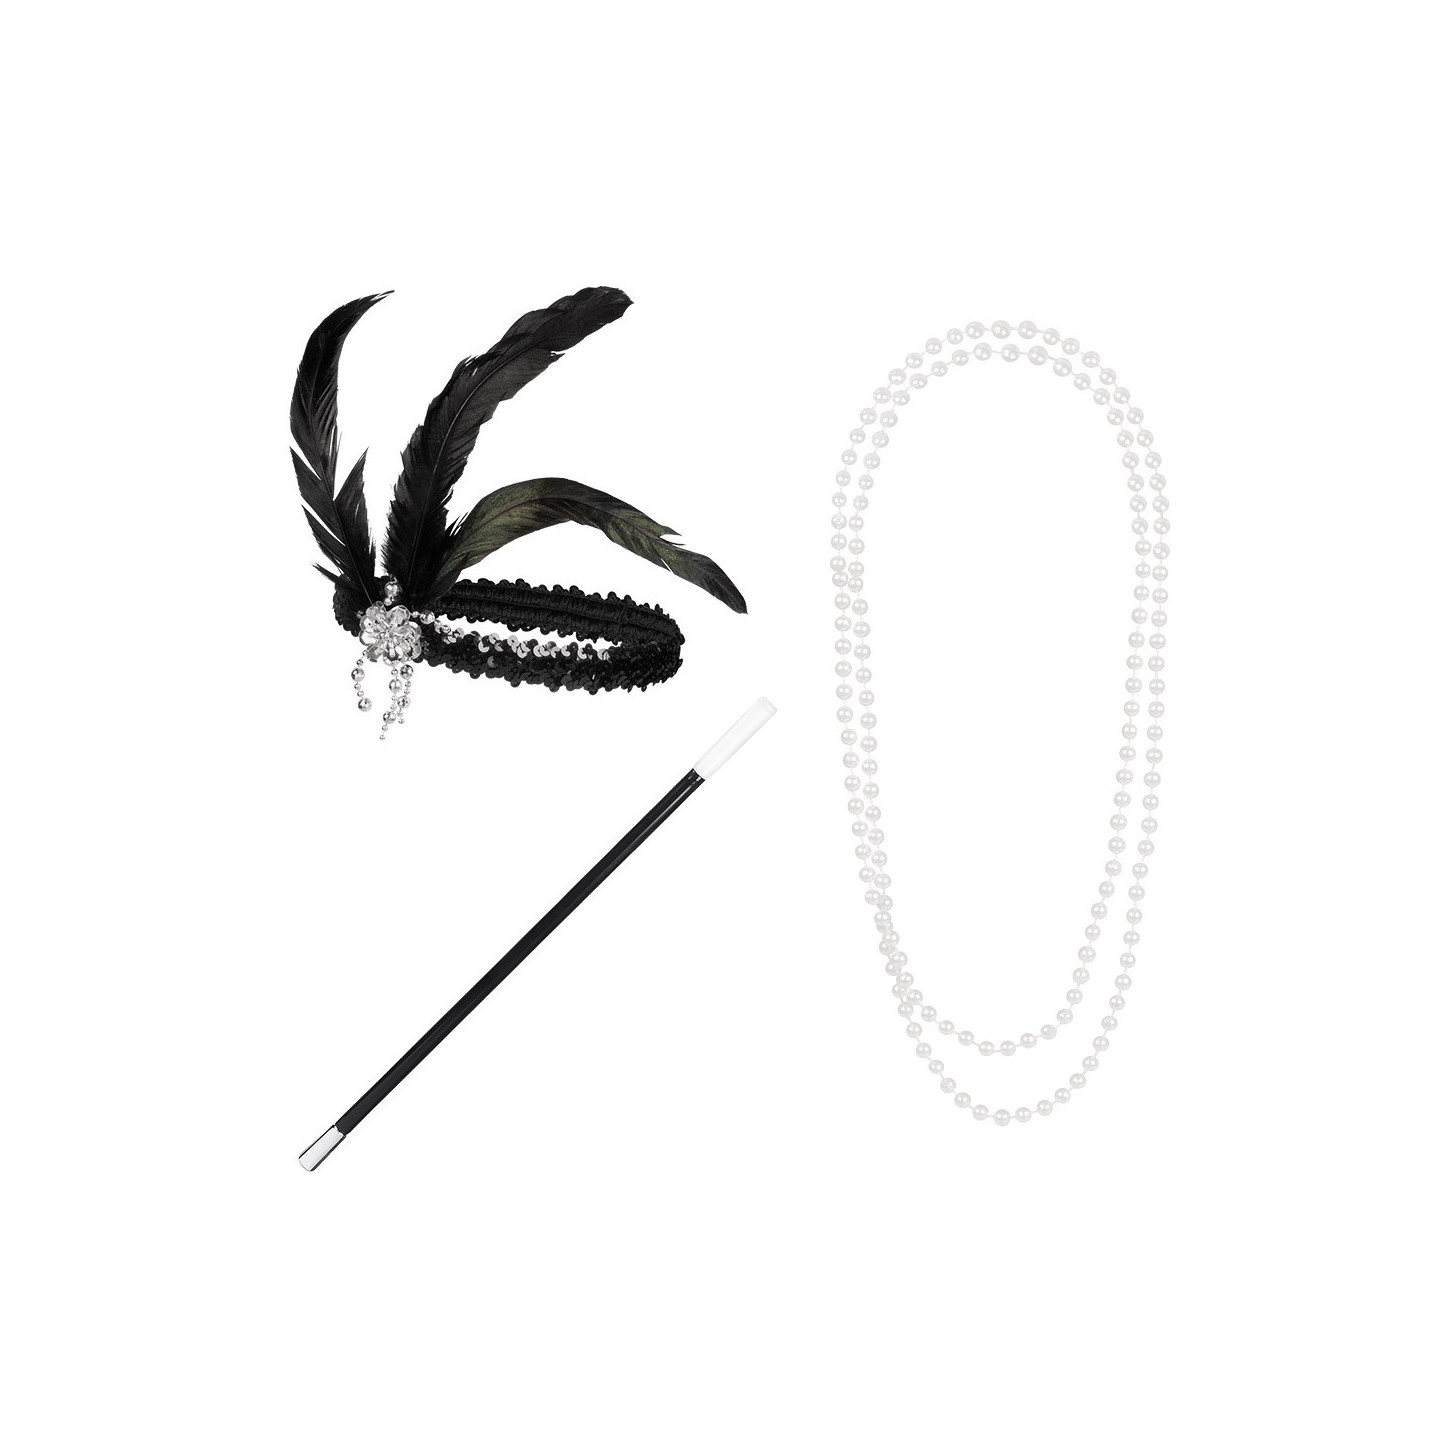 charleston jaren 20 accessoires kralen ketting flapper haarband